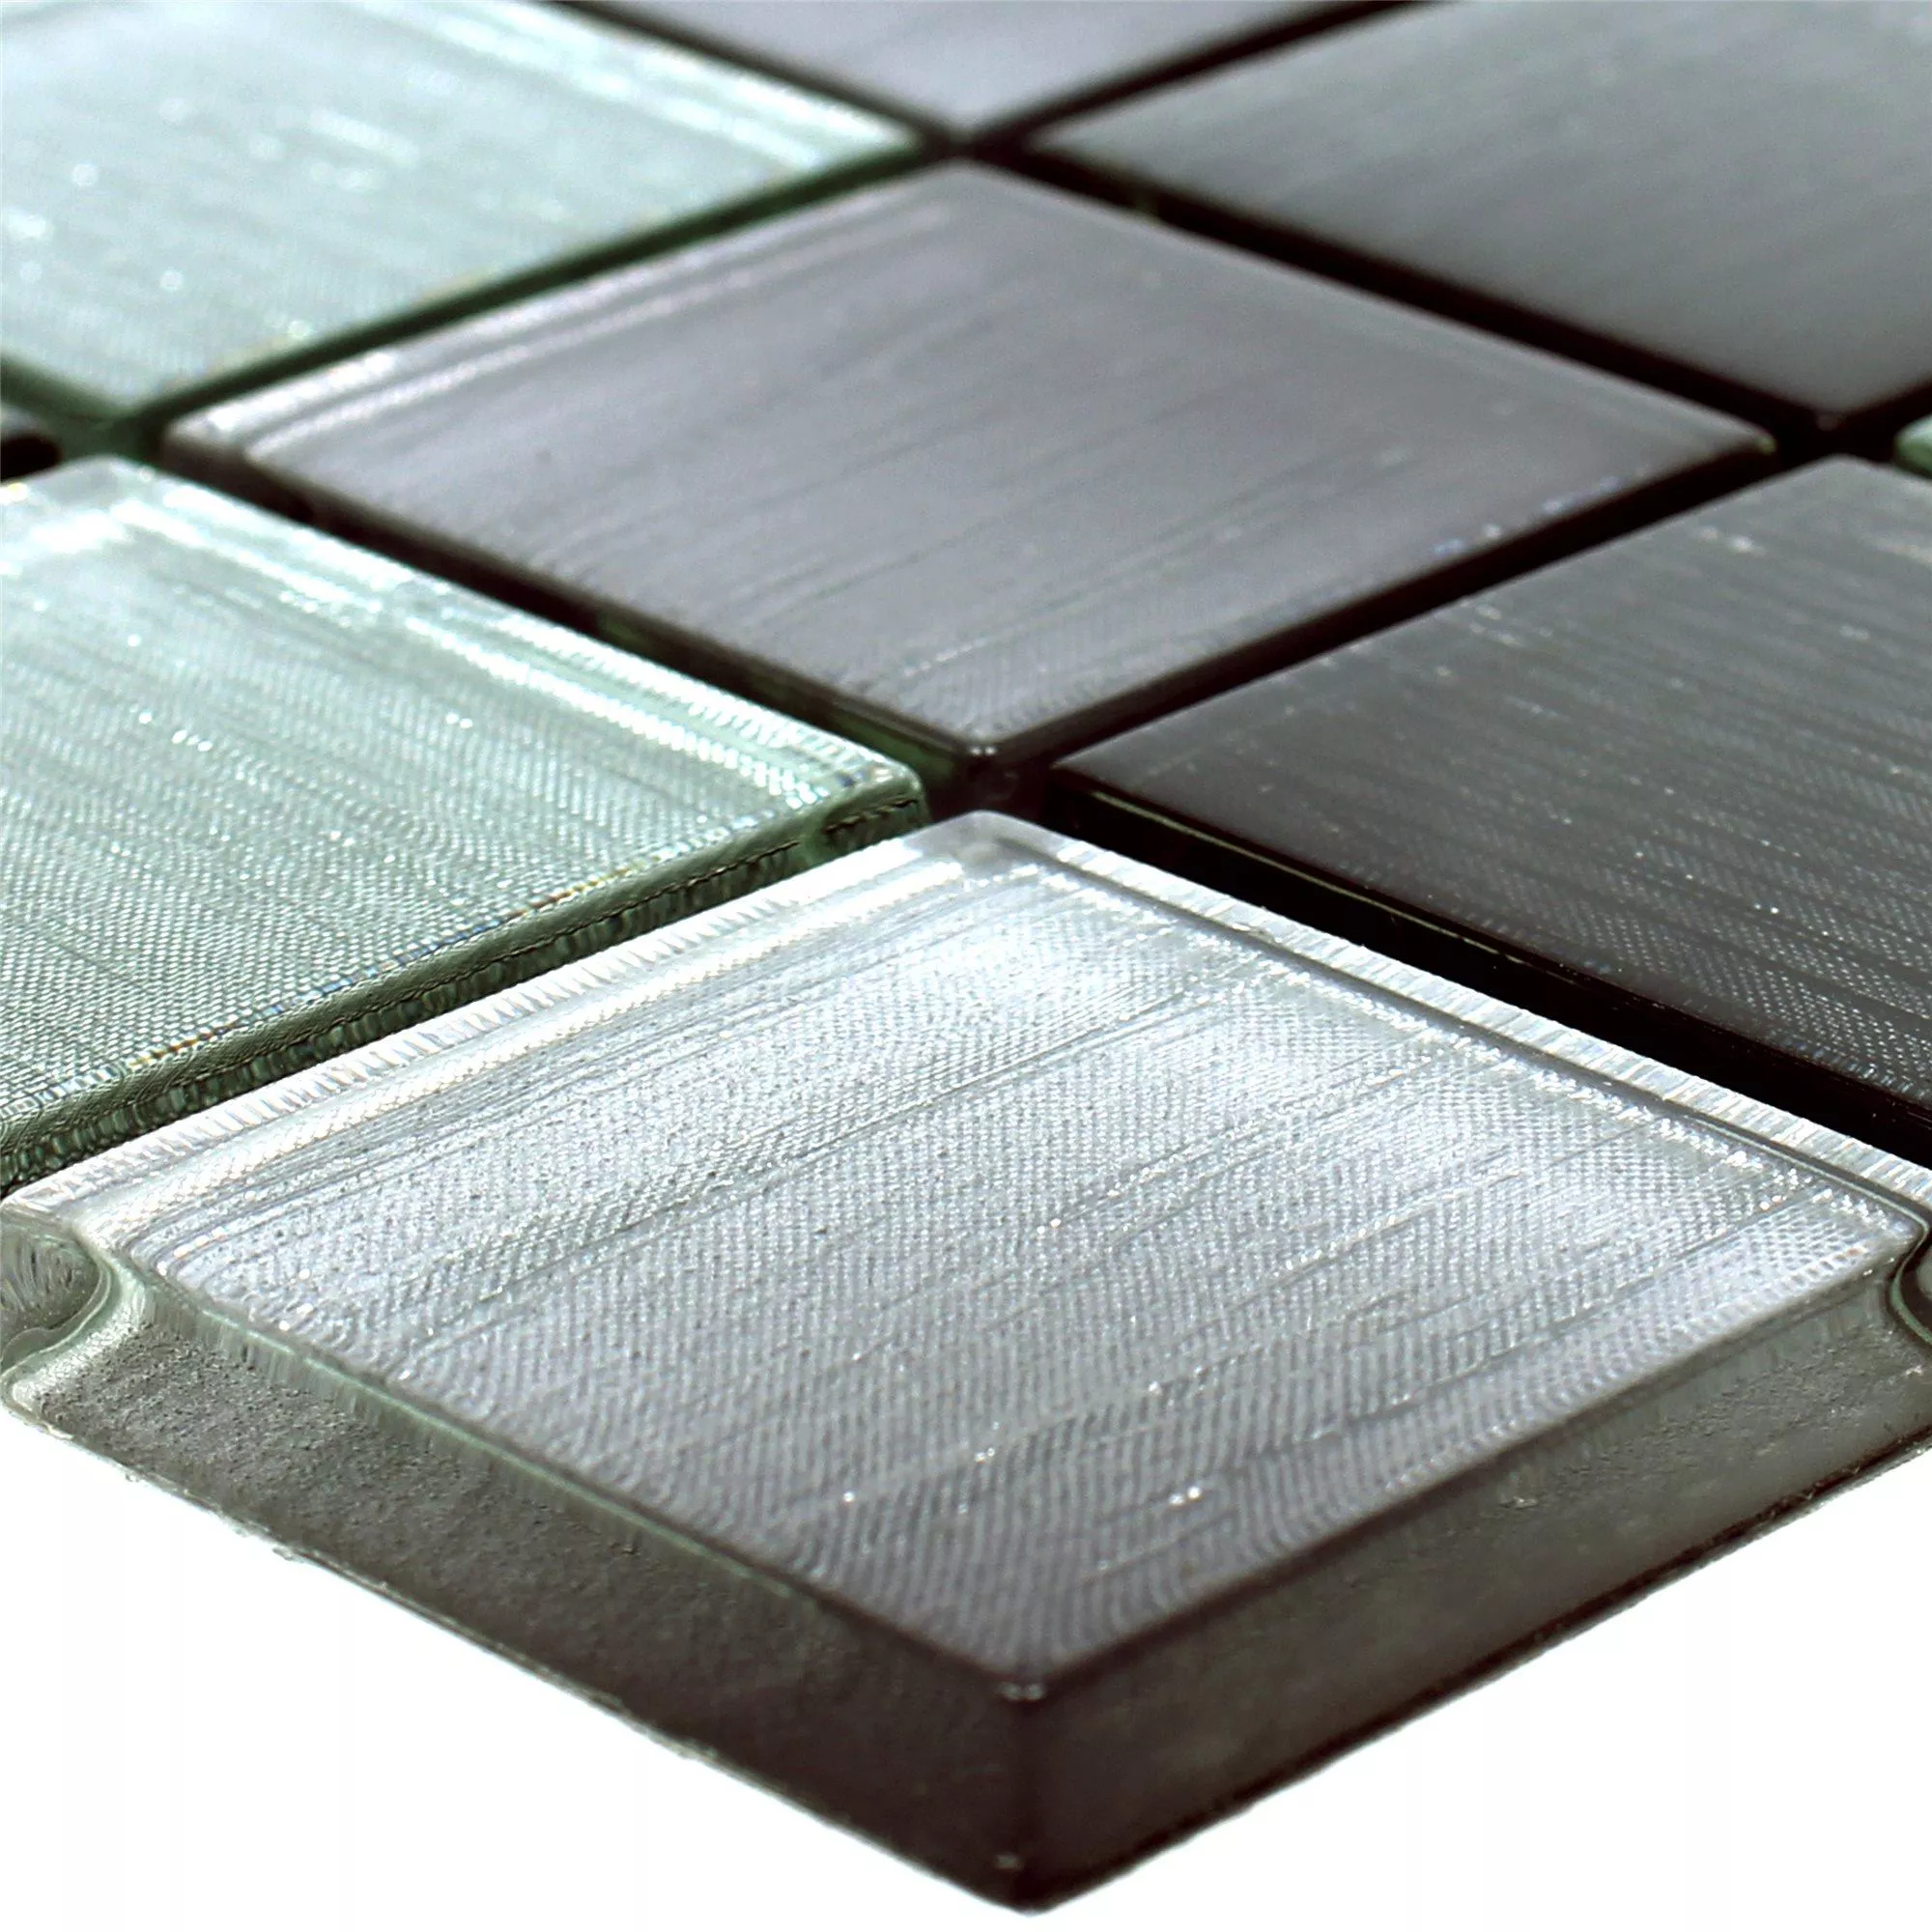 Sample Glass Mosaic Tiles Bellevue Black Silver